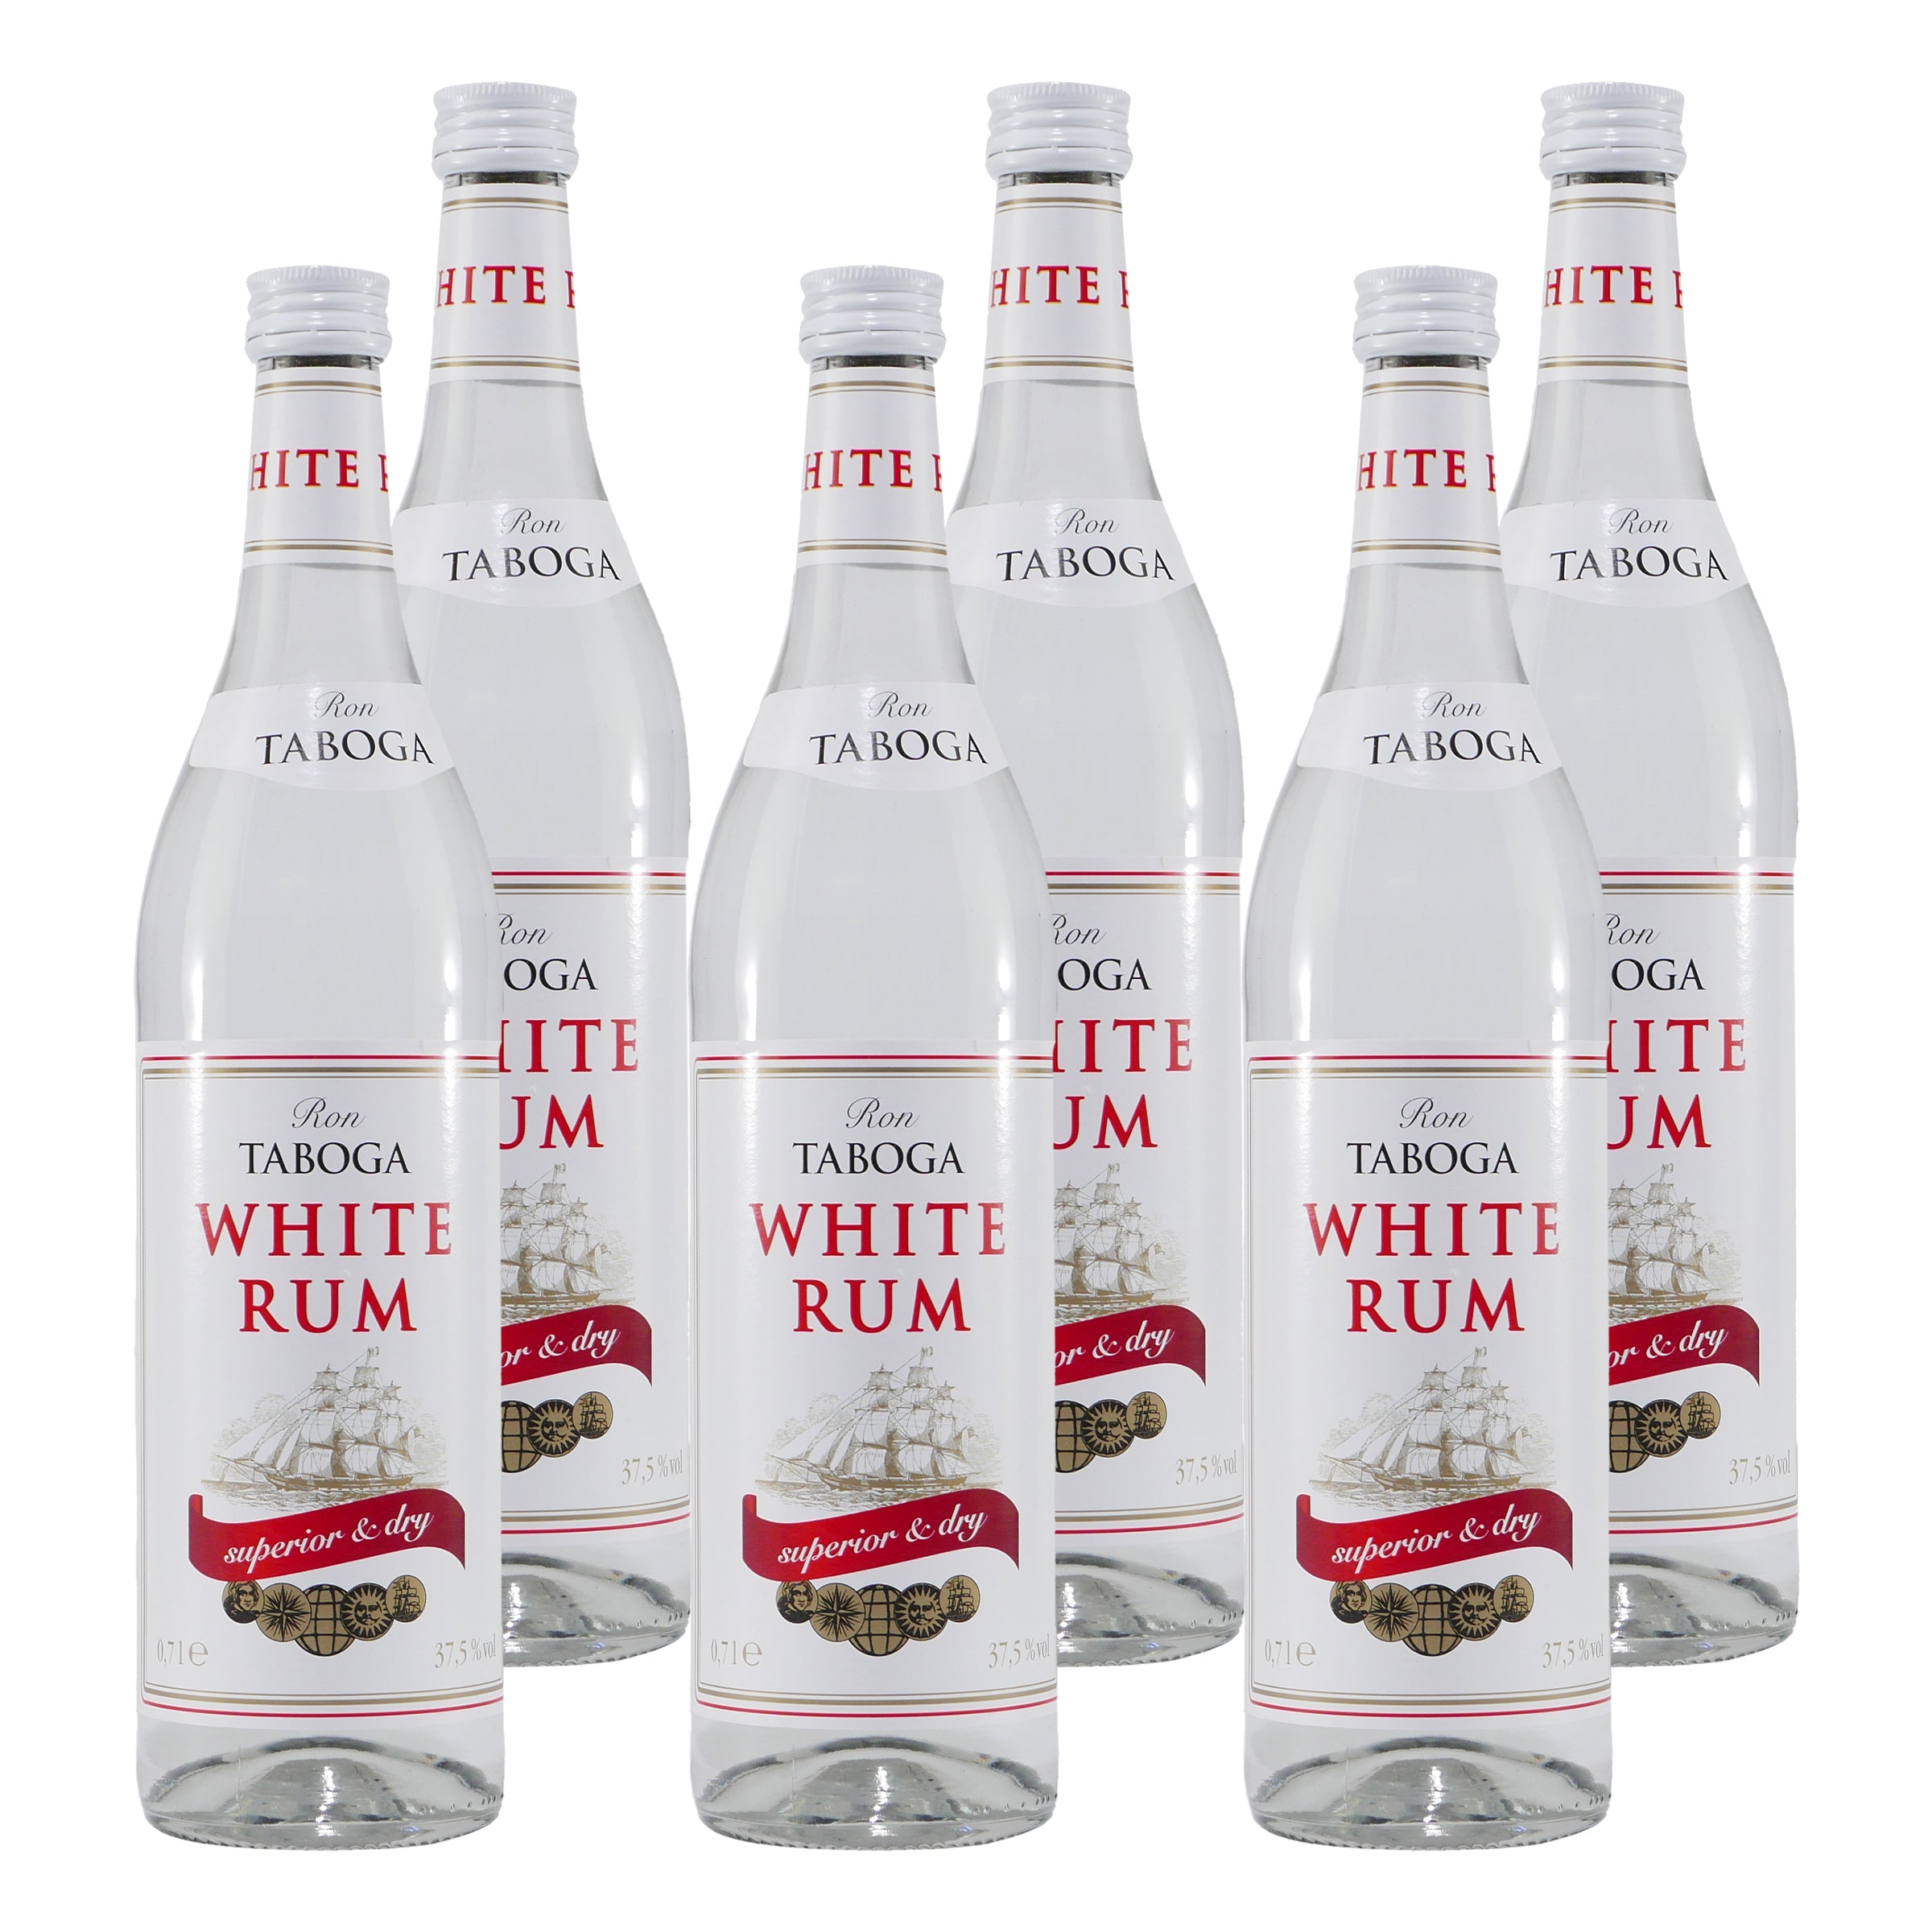 Ron Taboga White Rum (6 x 0,7L)